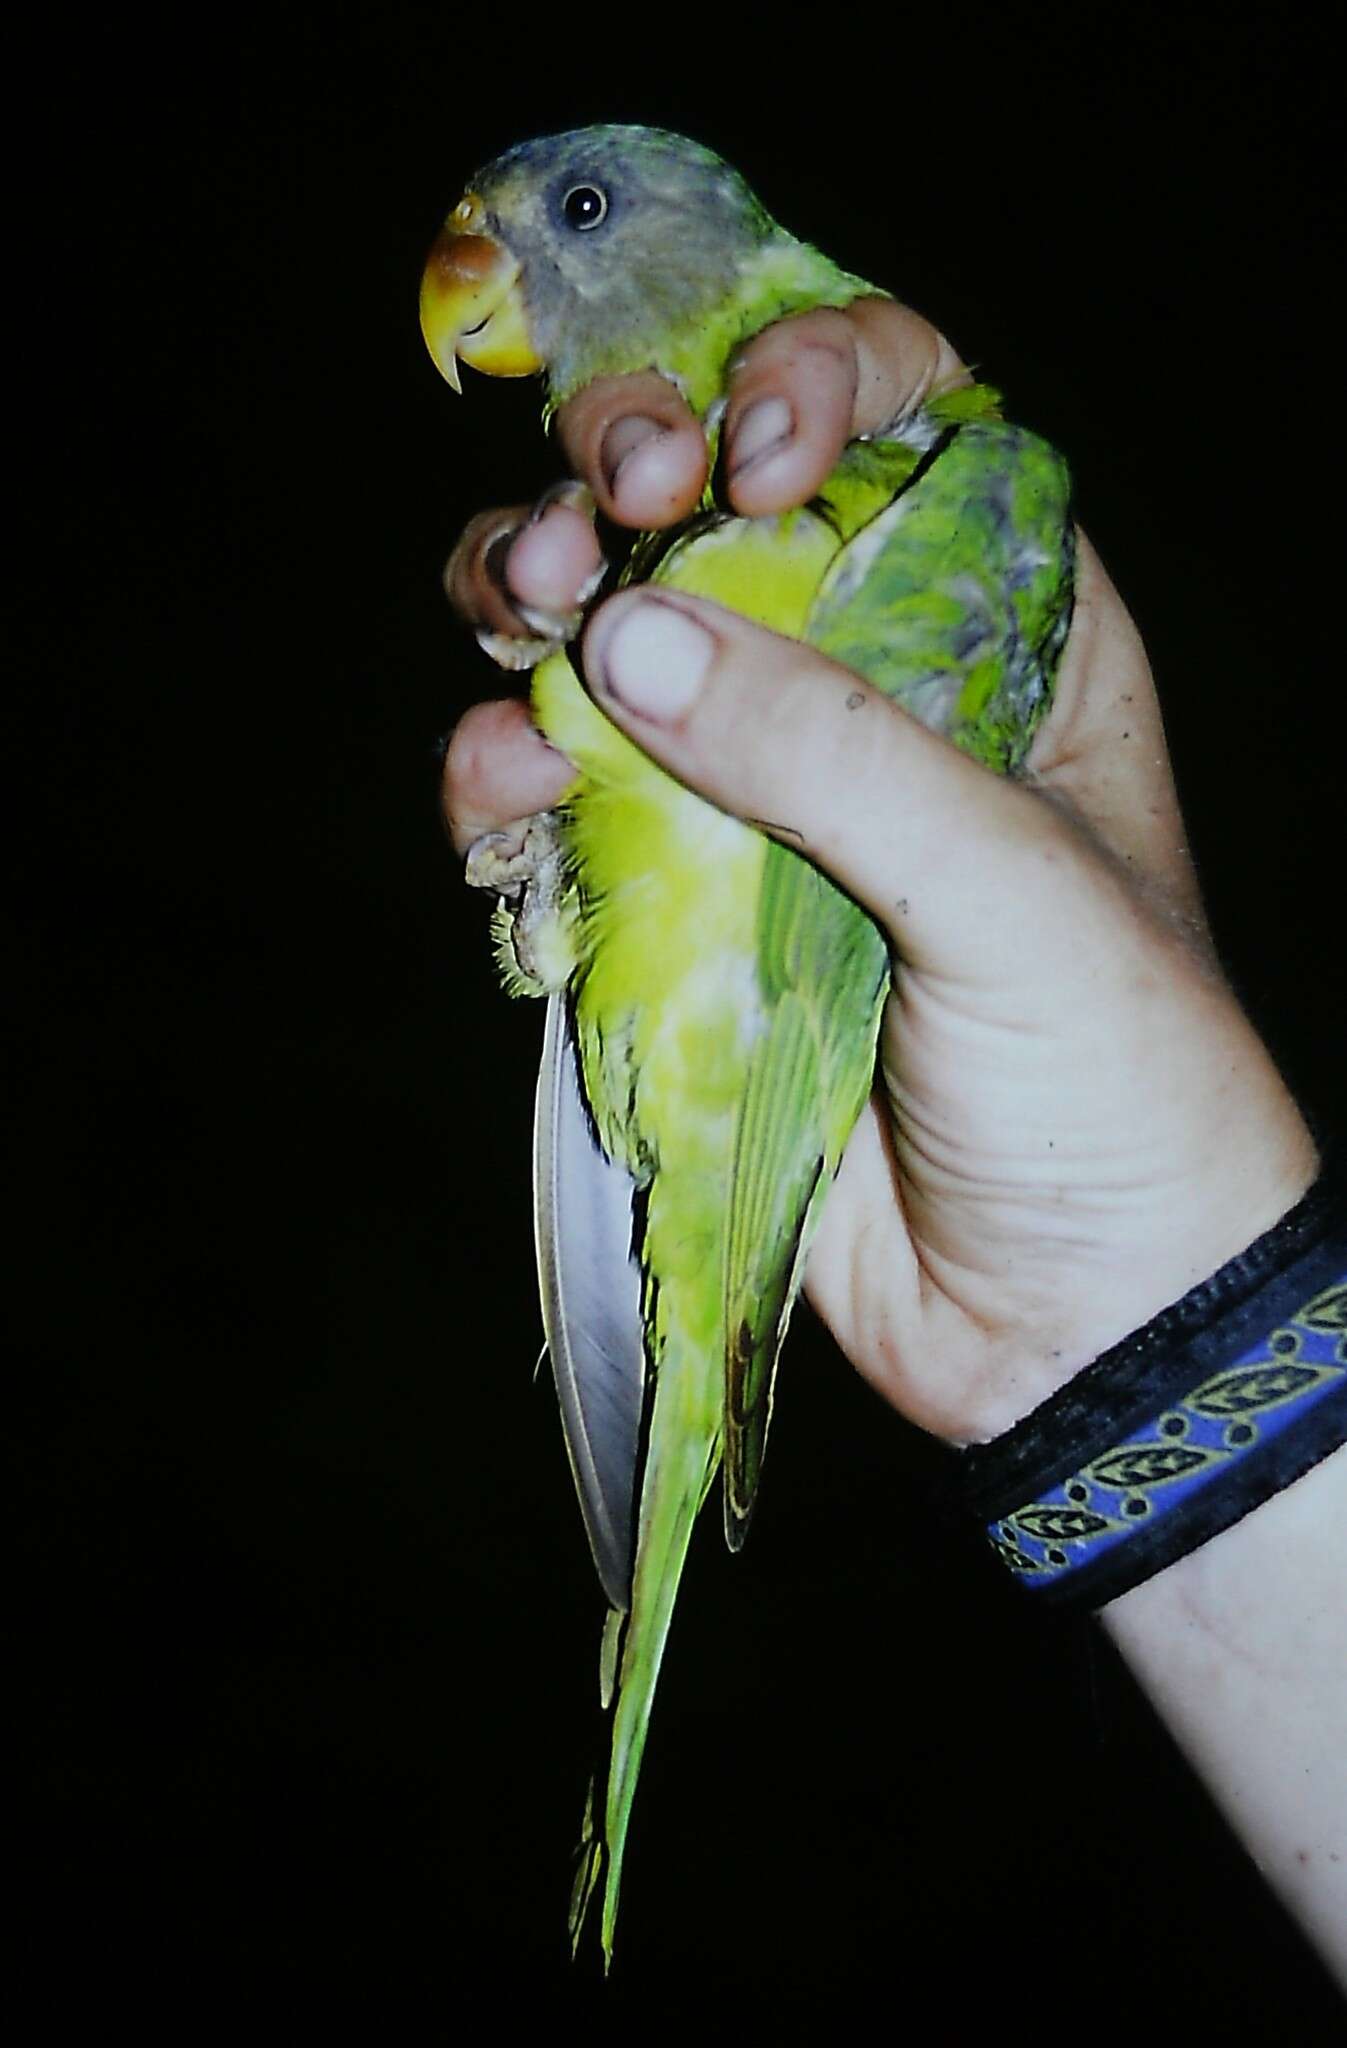 Image of Grey-headed Parakeet